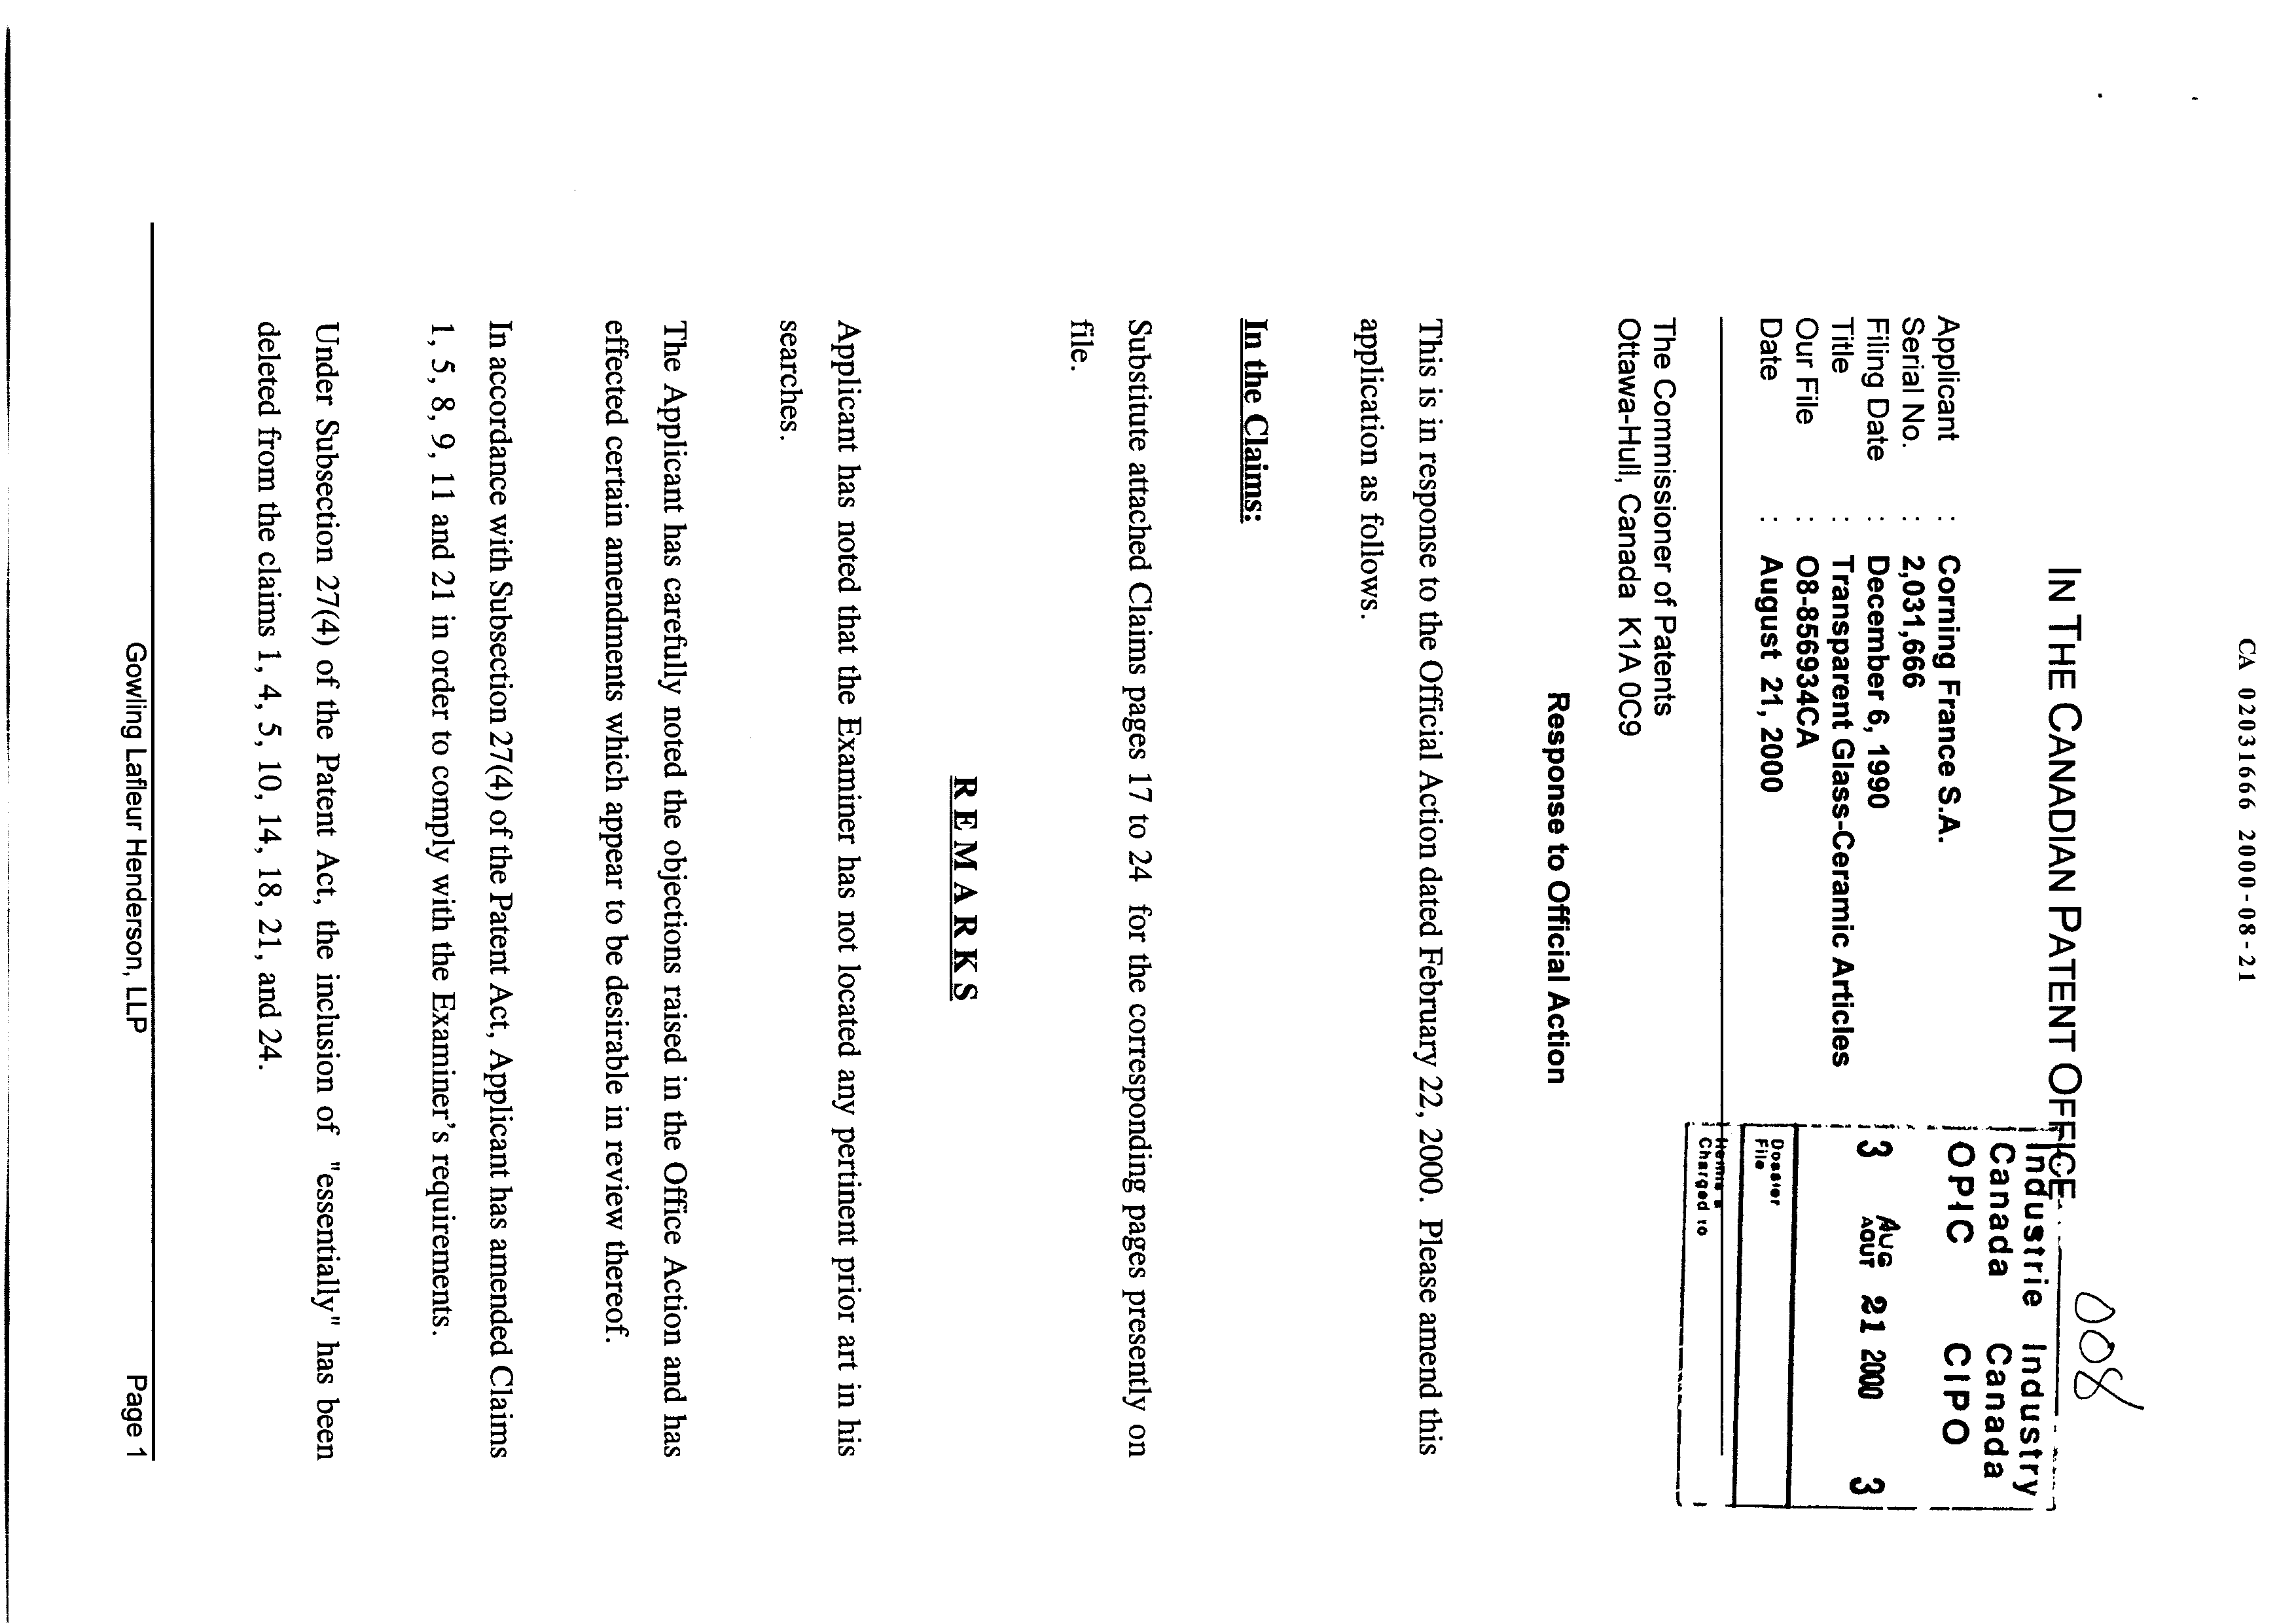 Canadian Patent Document 2031666. Prosecution-Amendment 20000821. Image 1 of 12